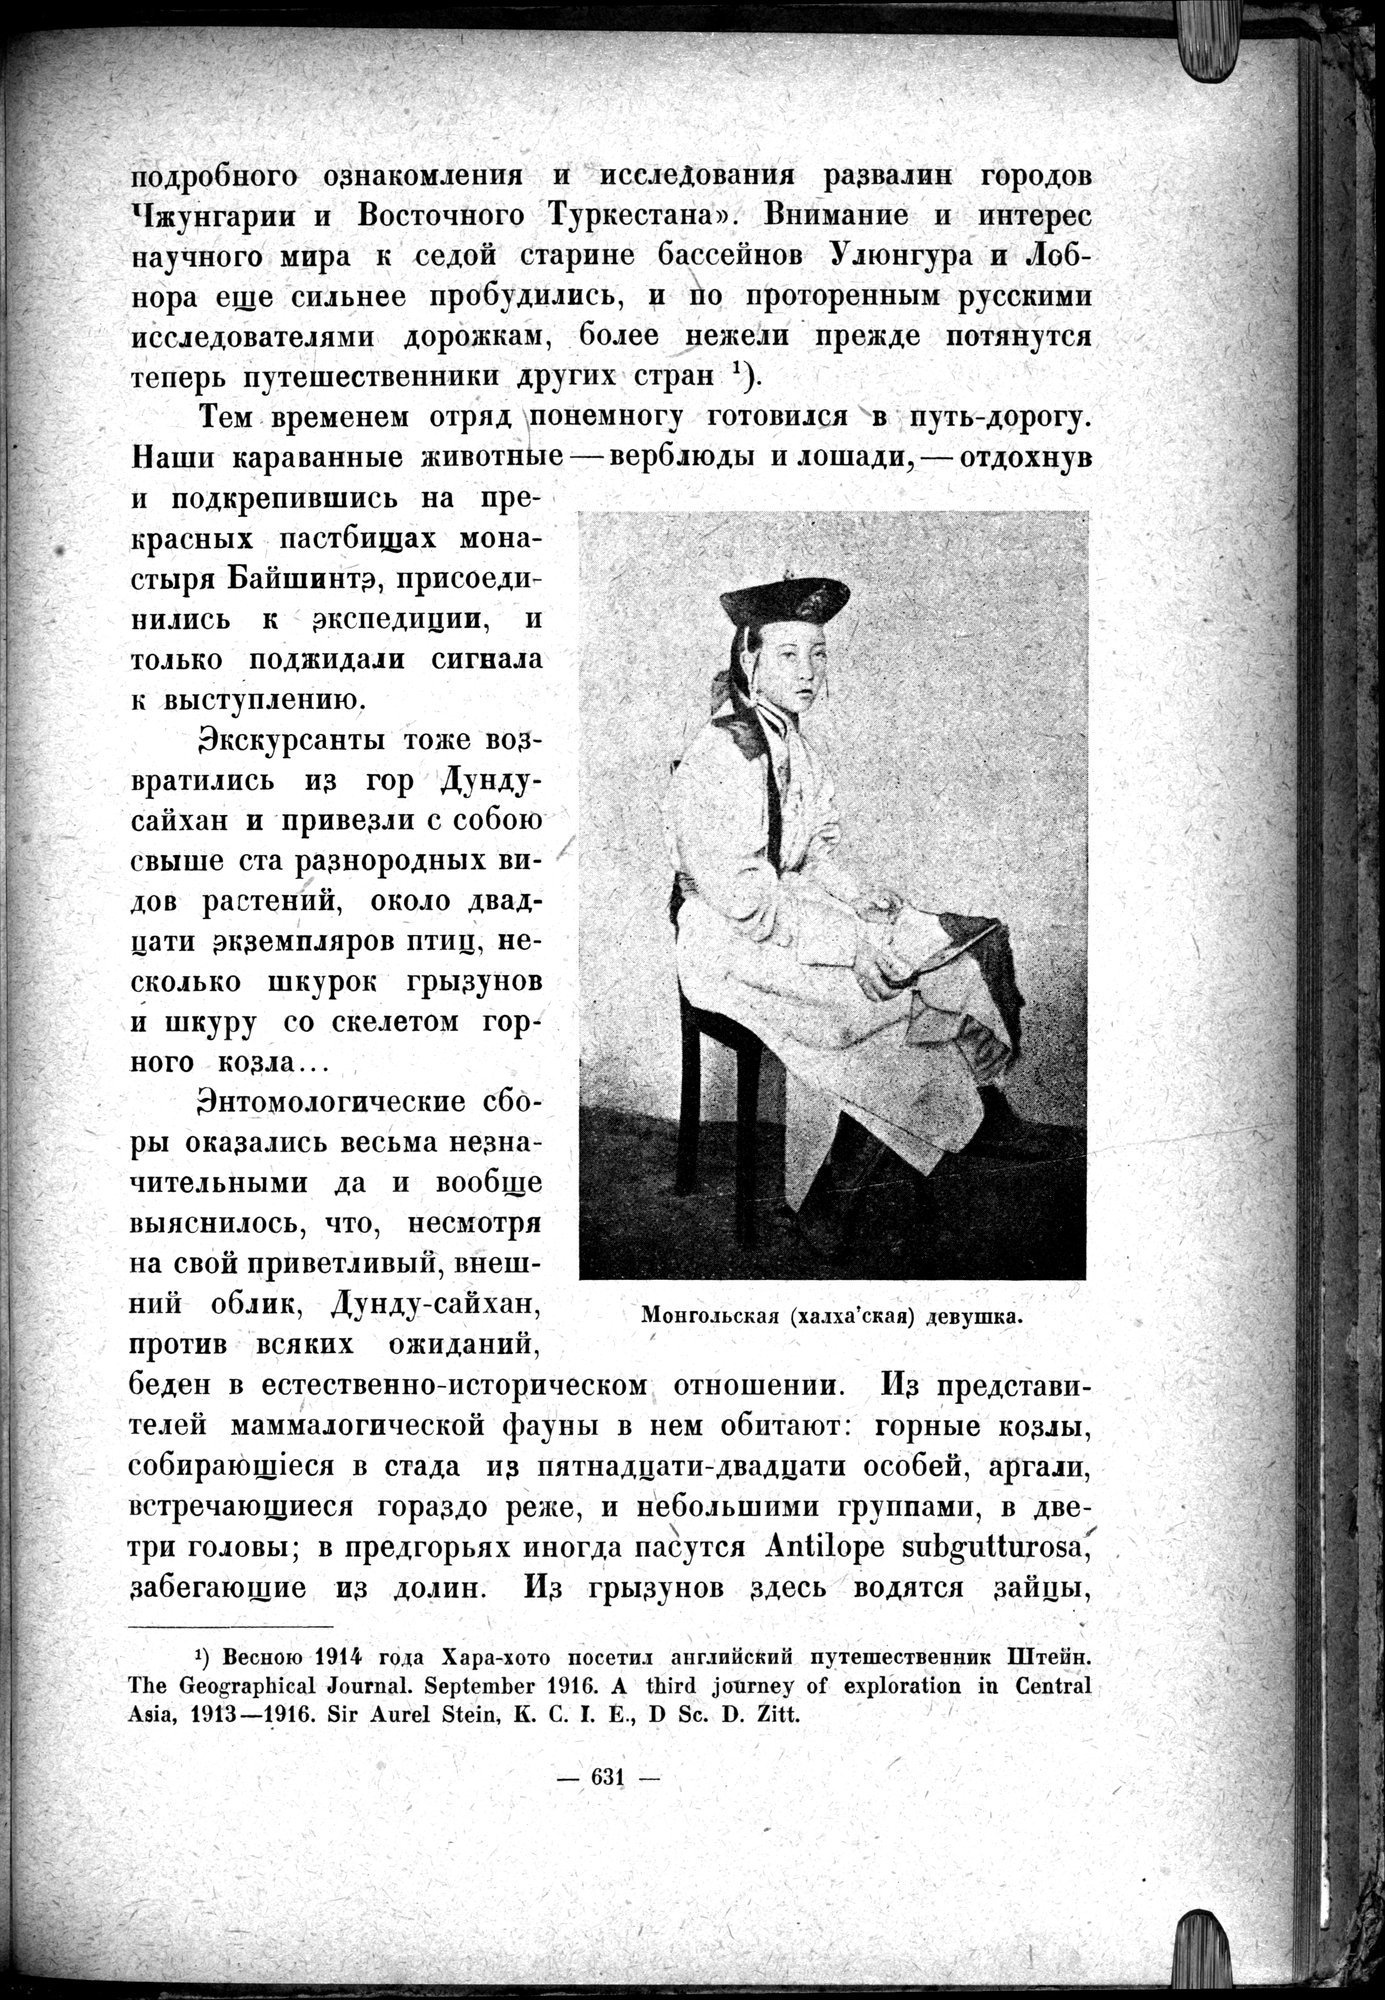 Mongoliya i Amdo i mertby gorod Khara-Khoto : vol.1 / Page 721 (Grayscale High Resolution Image)